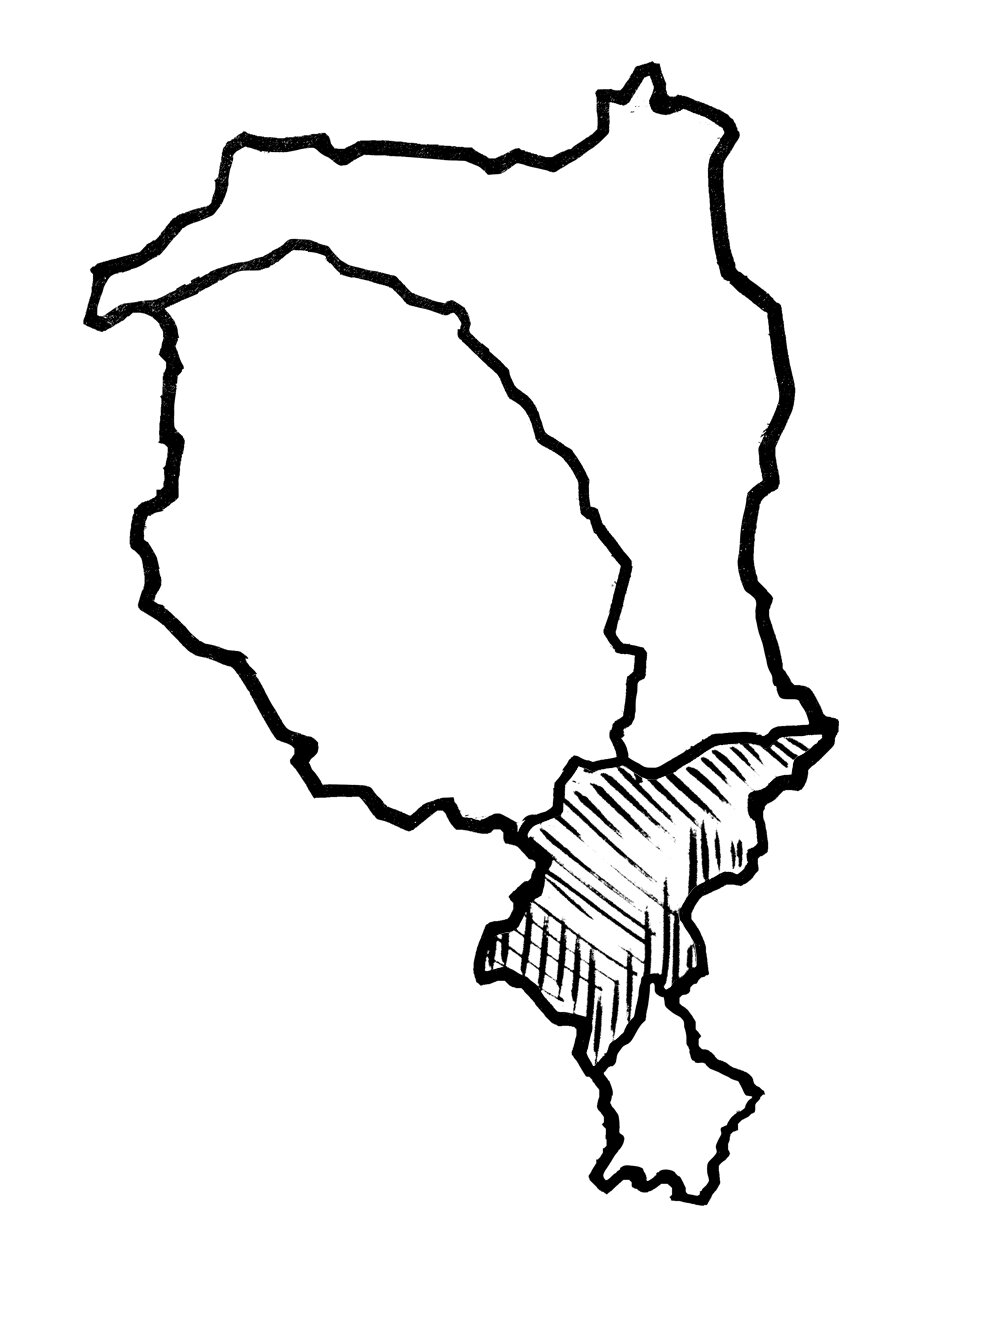 Map_Ticino_Regions.jpg